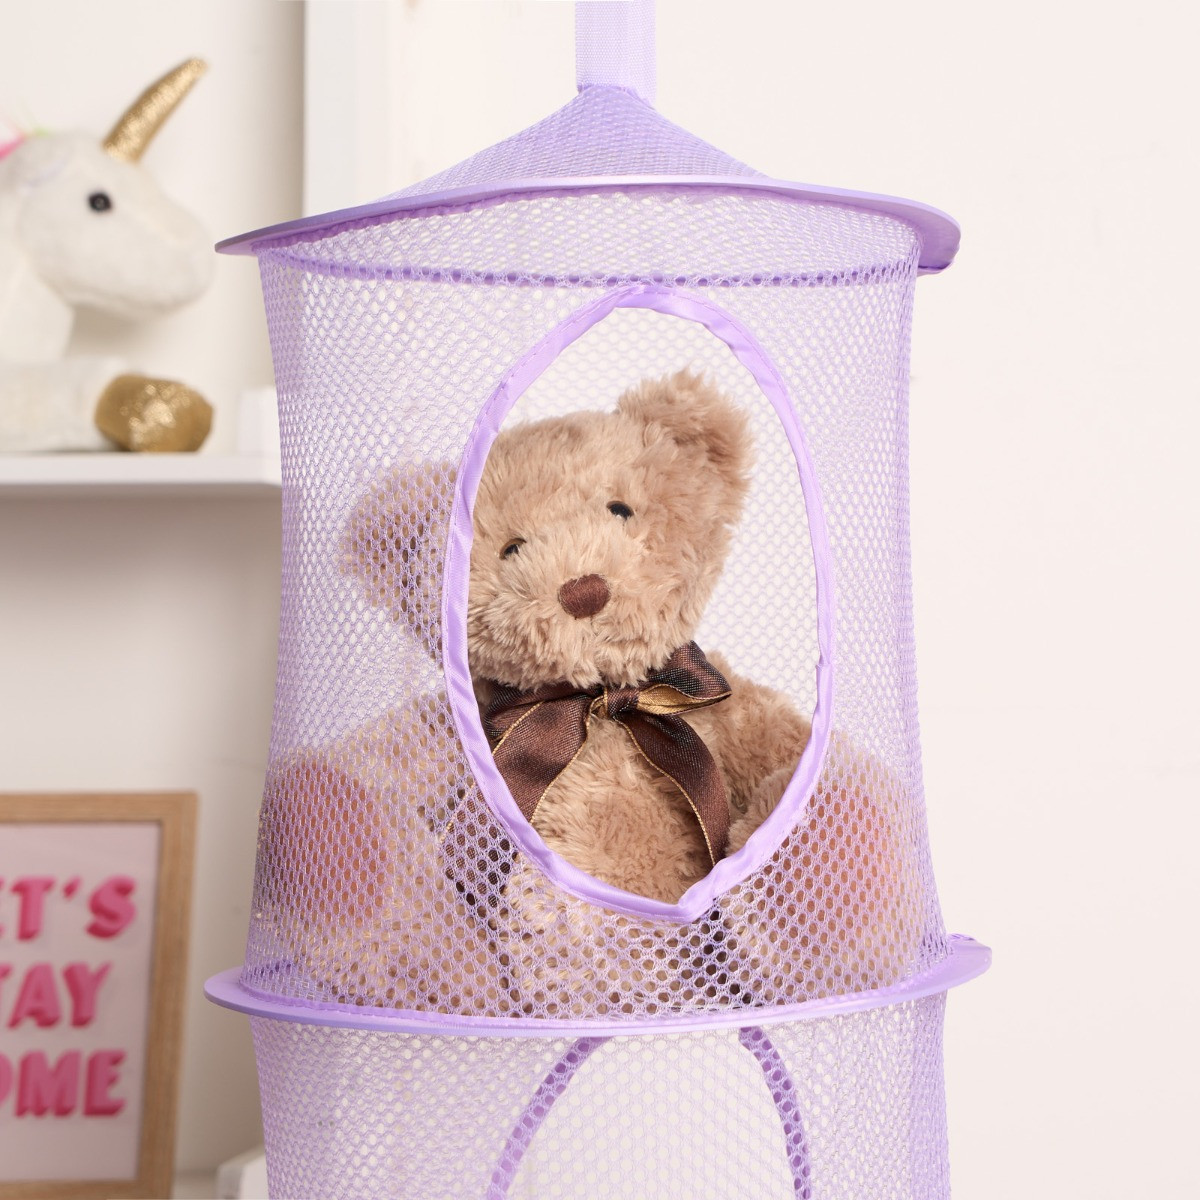 OHS Kids Toys Storage Hanging Net Basket - Lilac>